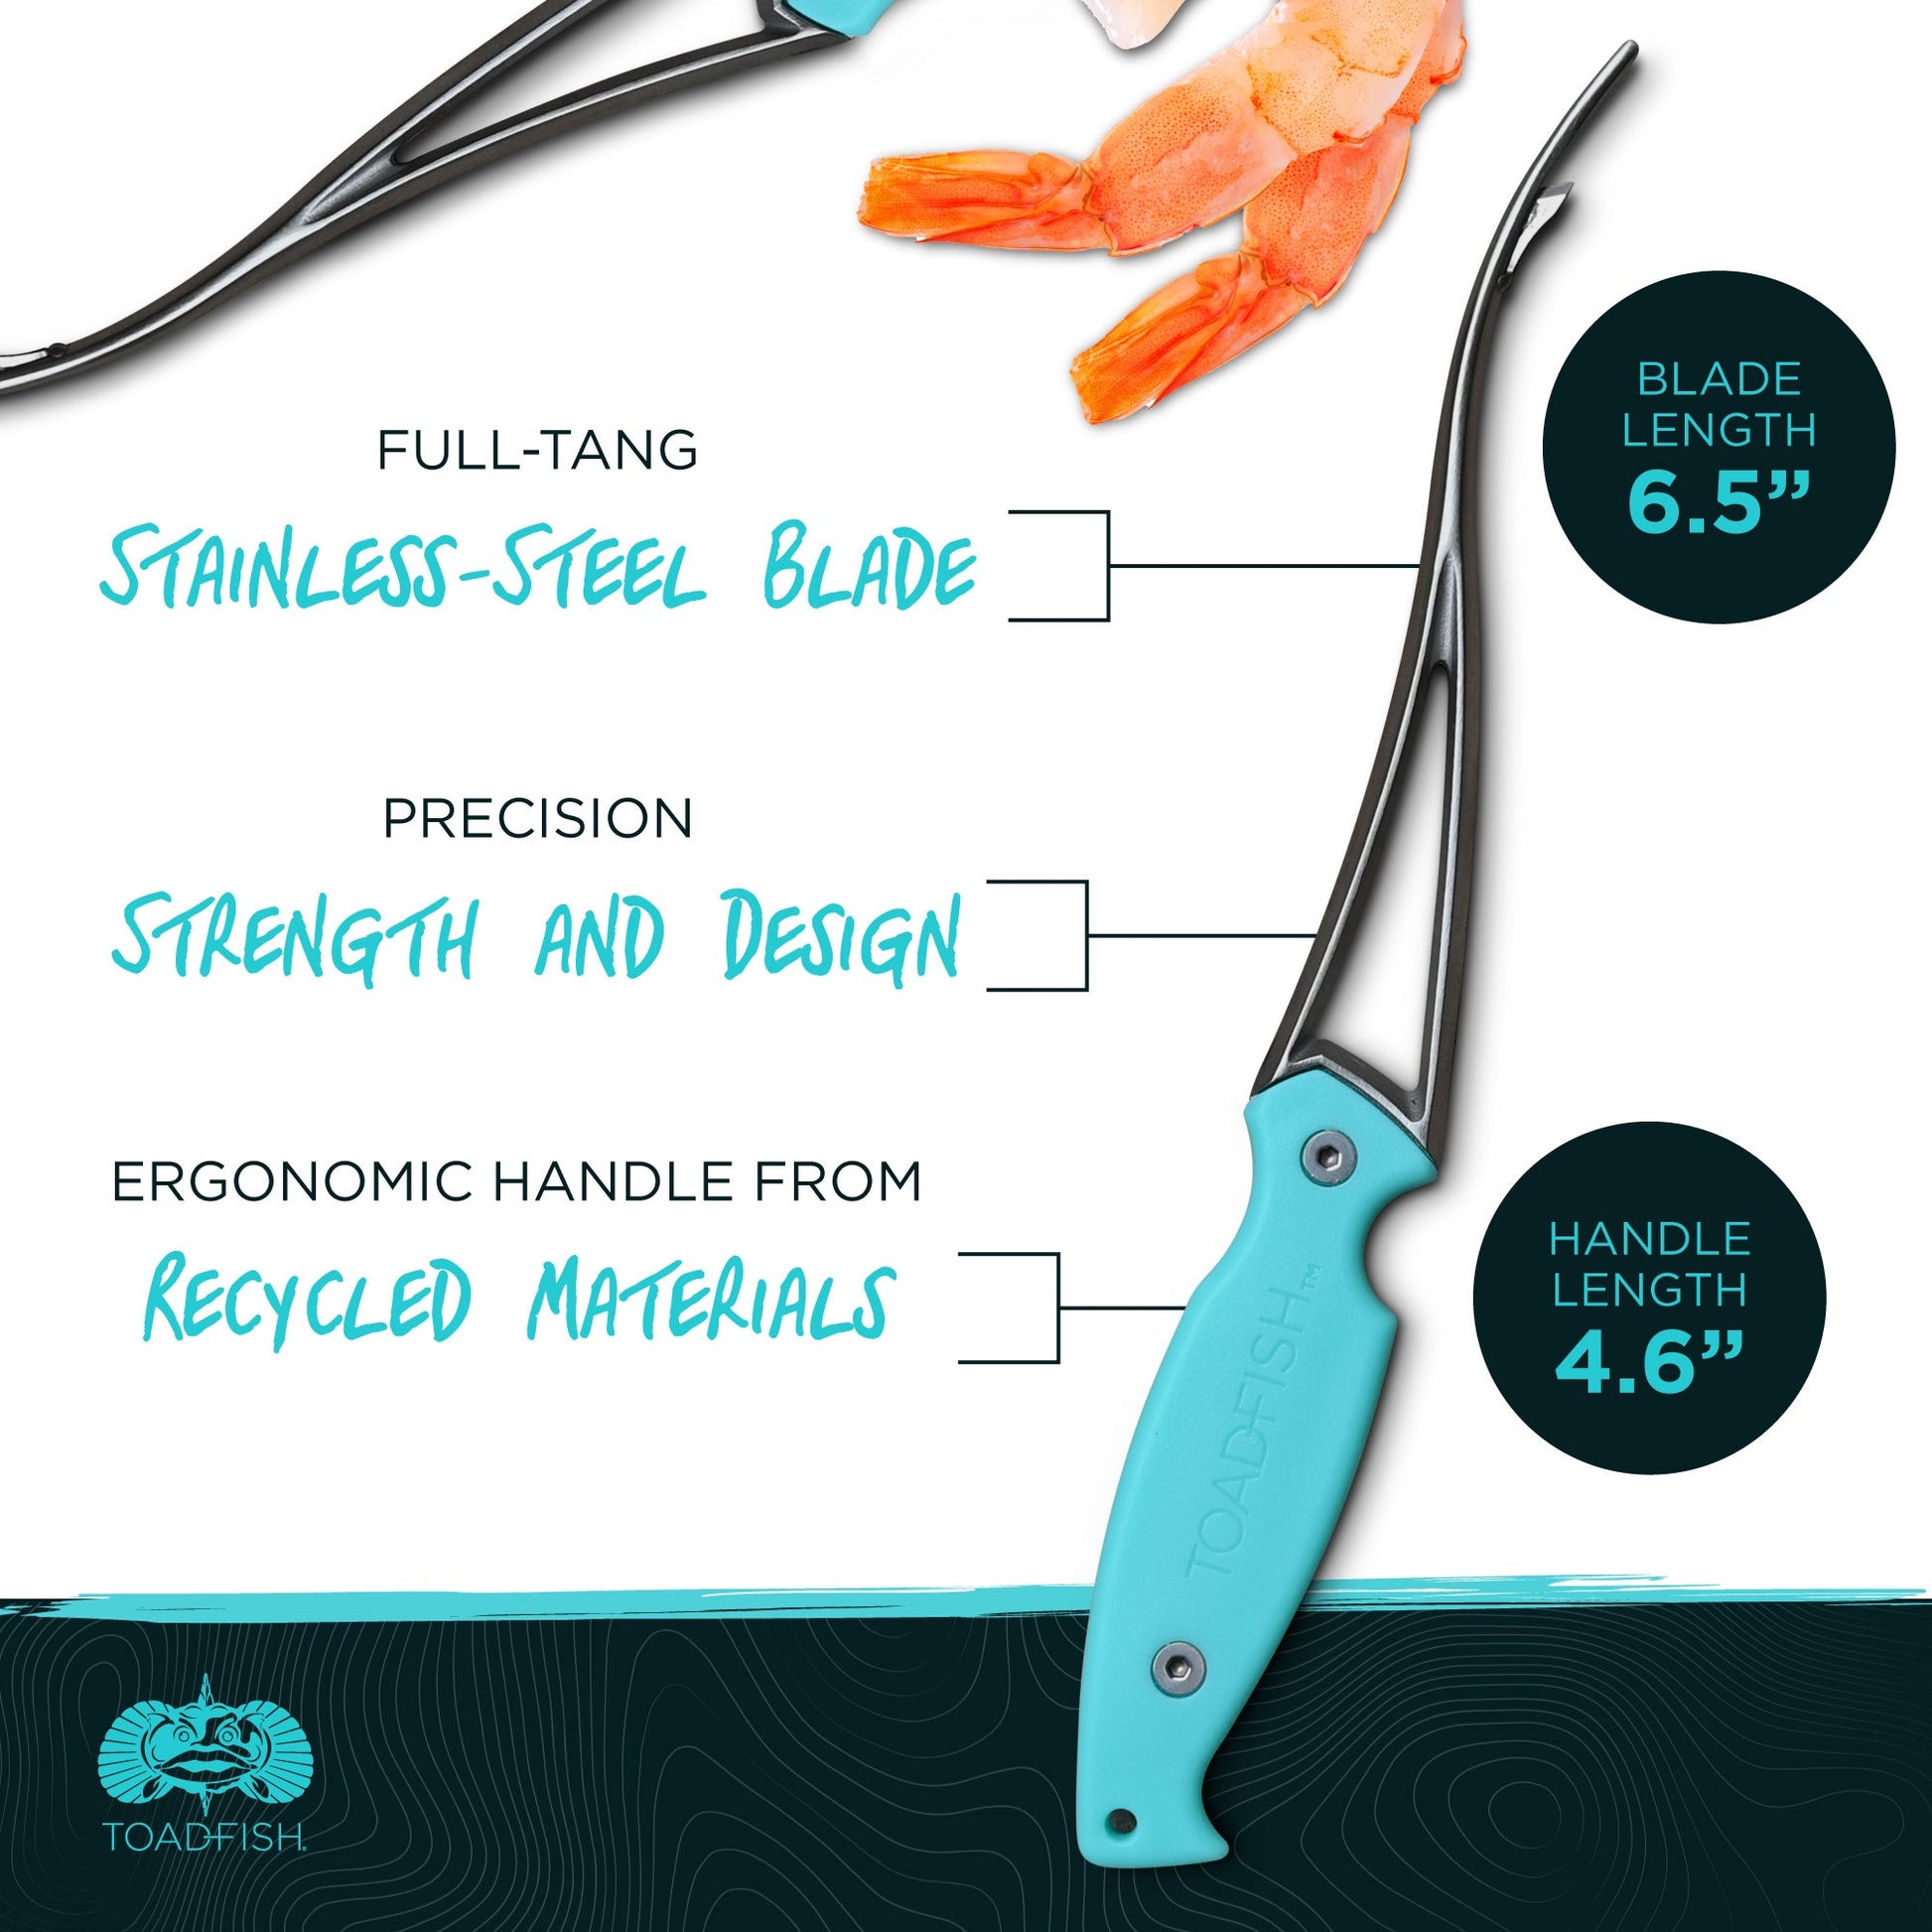 Shrimp Cleaner Kitchen Tools & Utensils Toadfish 